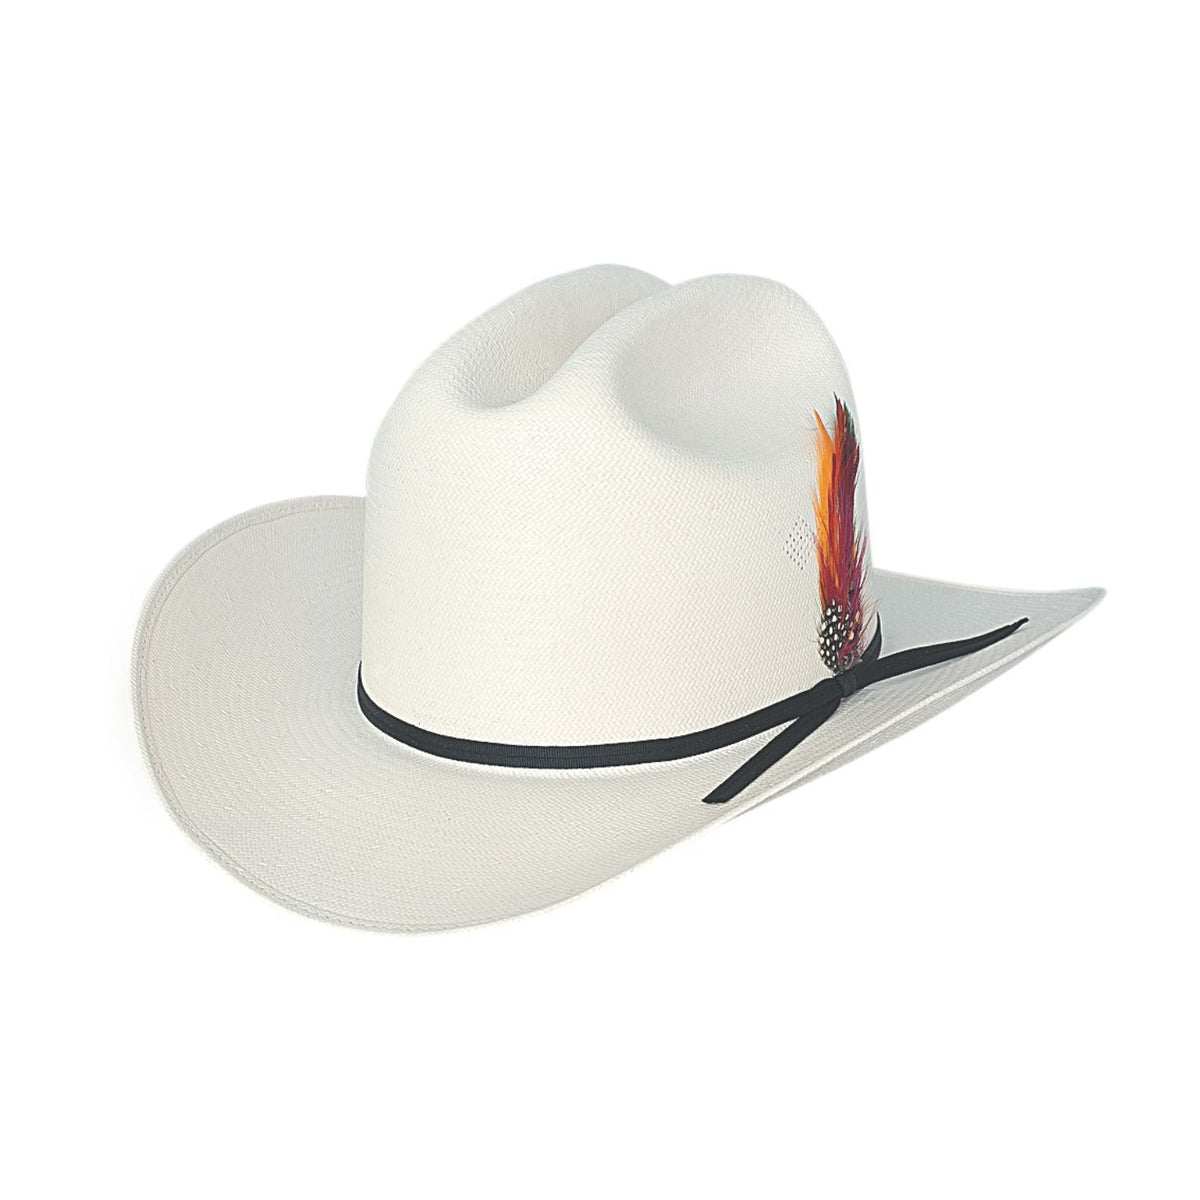 Bullhide El Cuatache 100X Shantung Panama Straw Hat